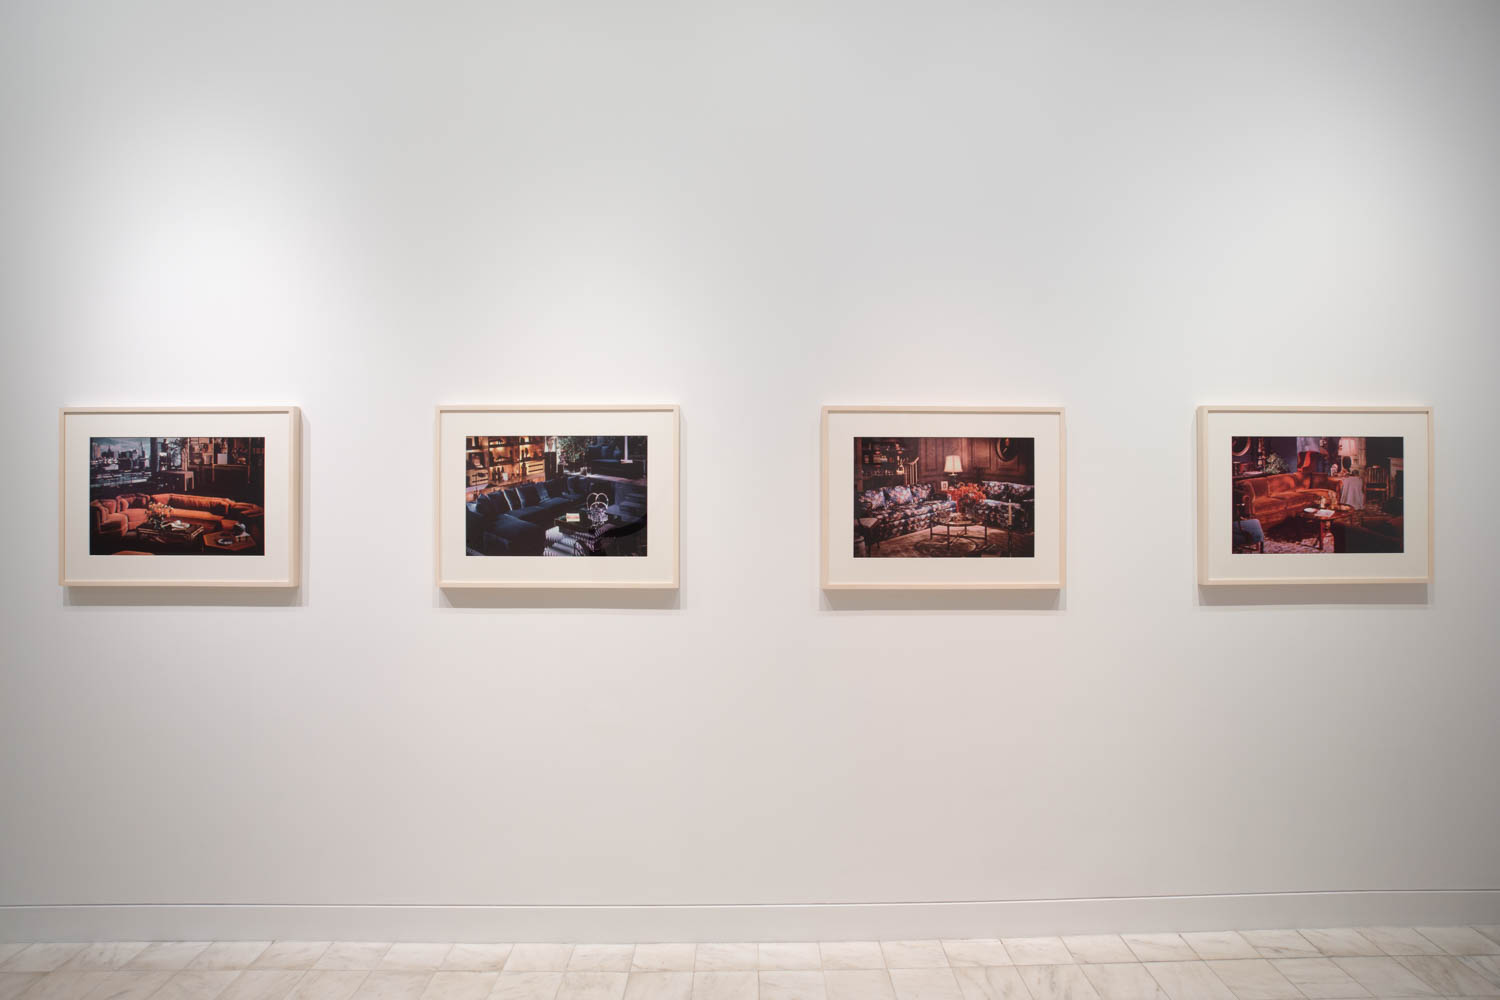 Richard Prince<div><i>Untitled (Living rooms), </i>1977</div><div>Four ektacolor photographs</div><div>20 x 24 inches each(50.8 x 61 cm each)</div>